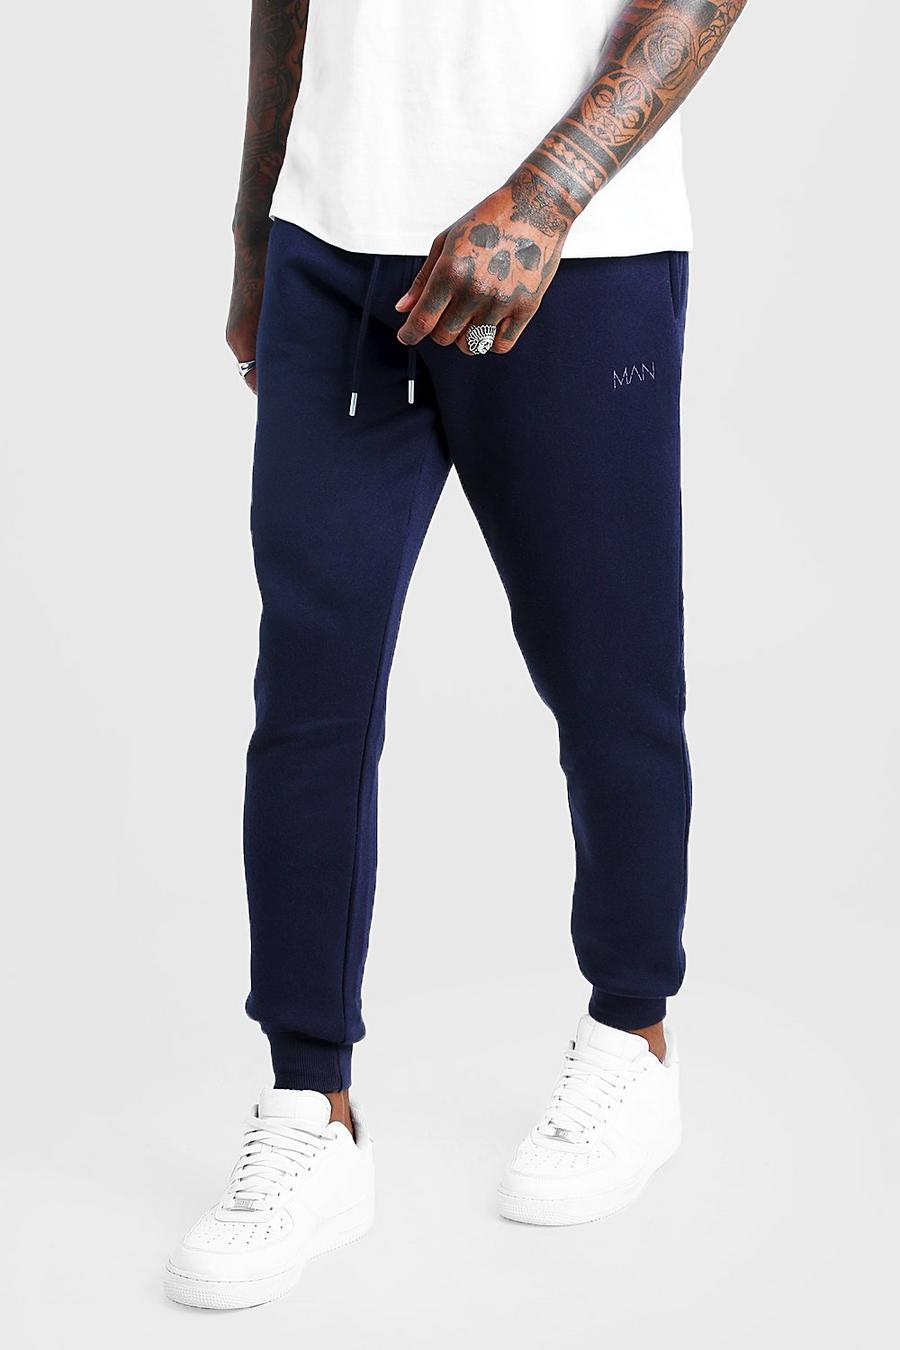 Pantalones de correr Slim Fit MAN, Azul marino image number 1